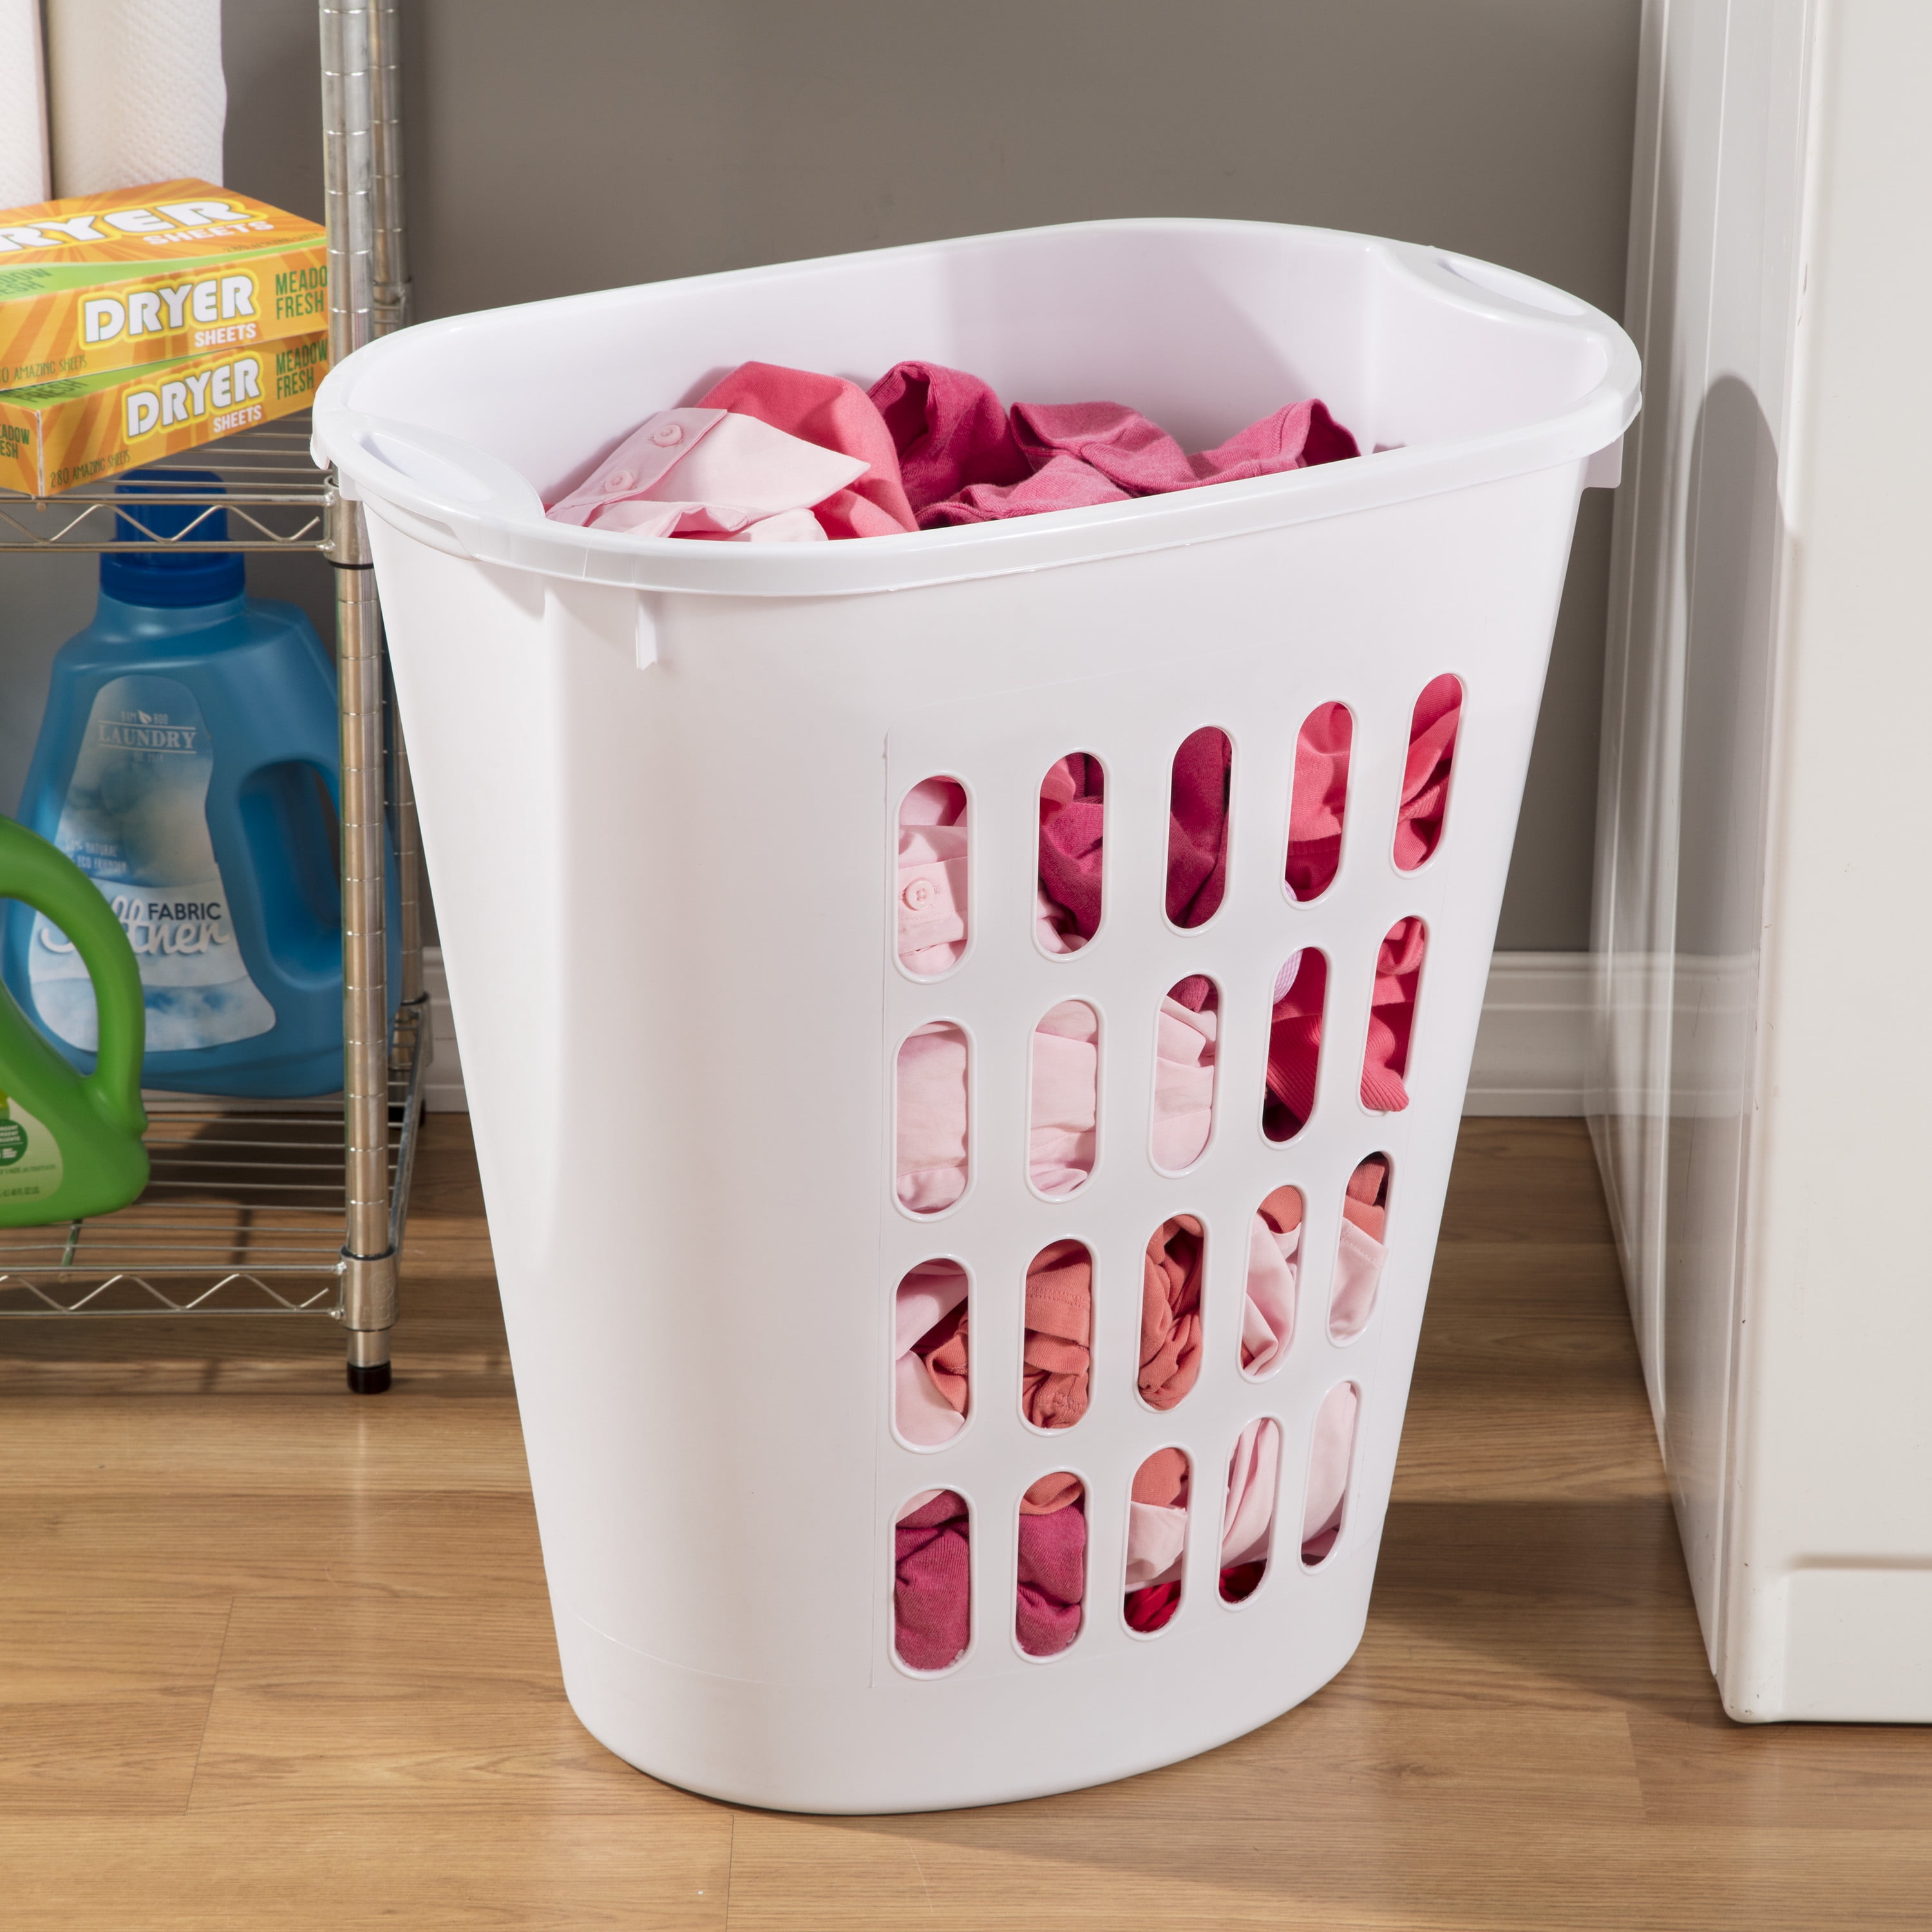 Details about   Circular Plastic Laundry Linen Washing Basket Bin Storage Hamper With Lid 6Color 